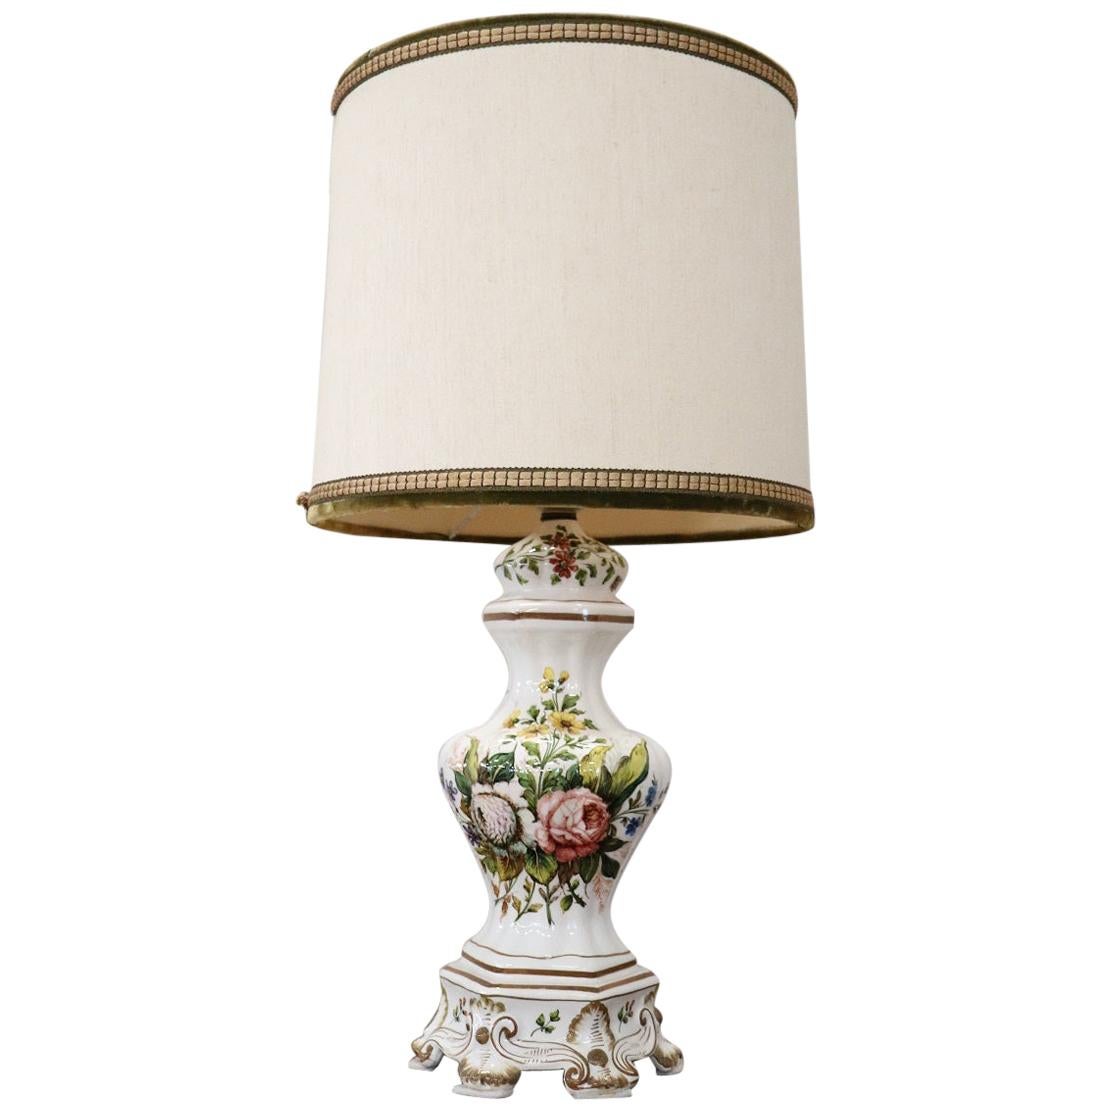 20th Century Italian Ceramic Table Lamp Signed Manufacture of Bassano